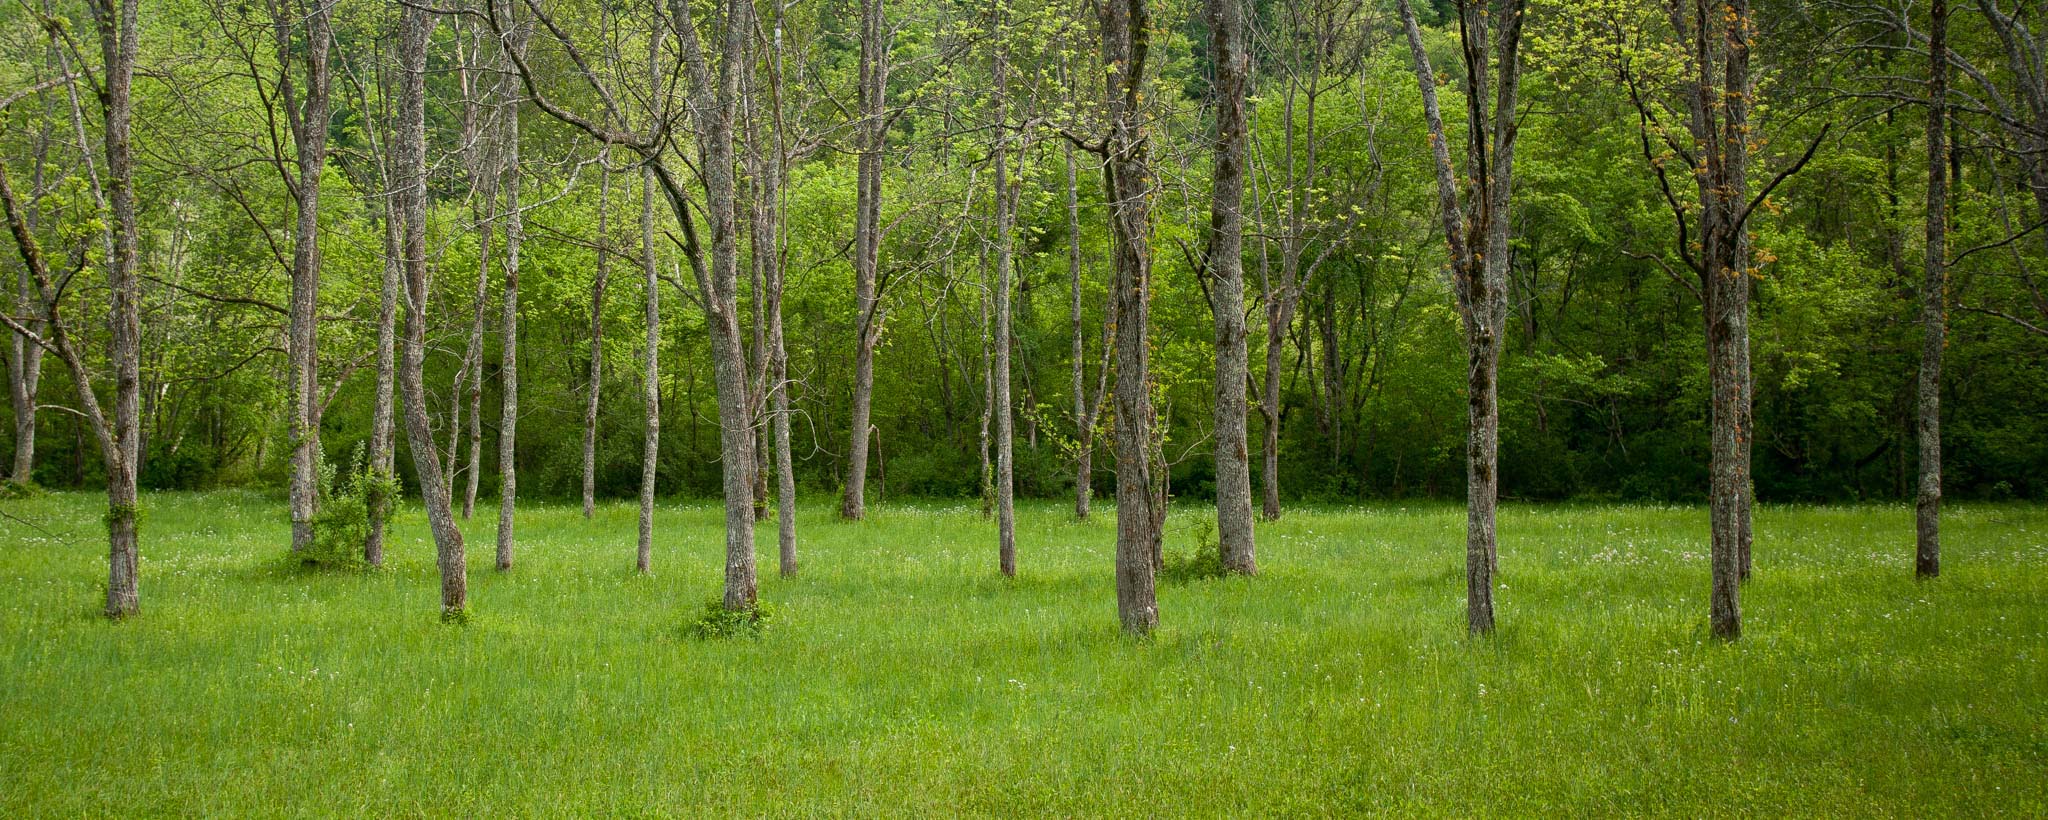 Woods in springtime